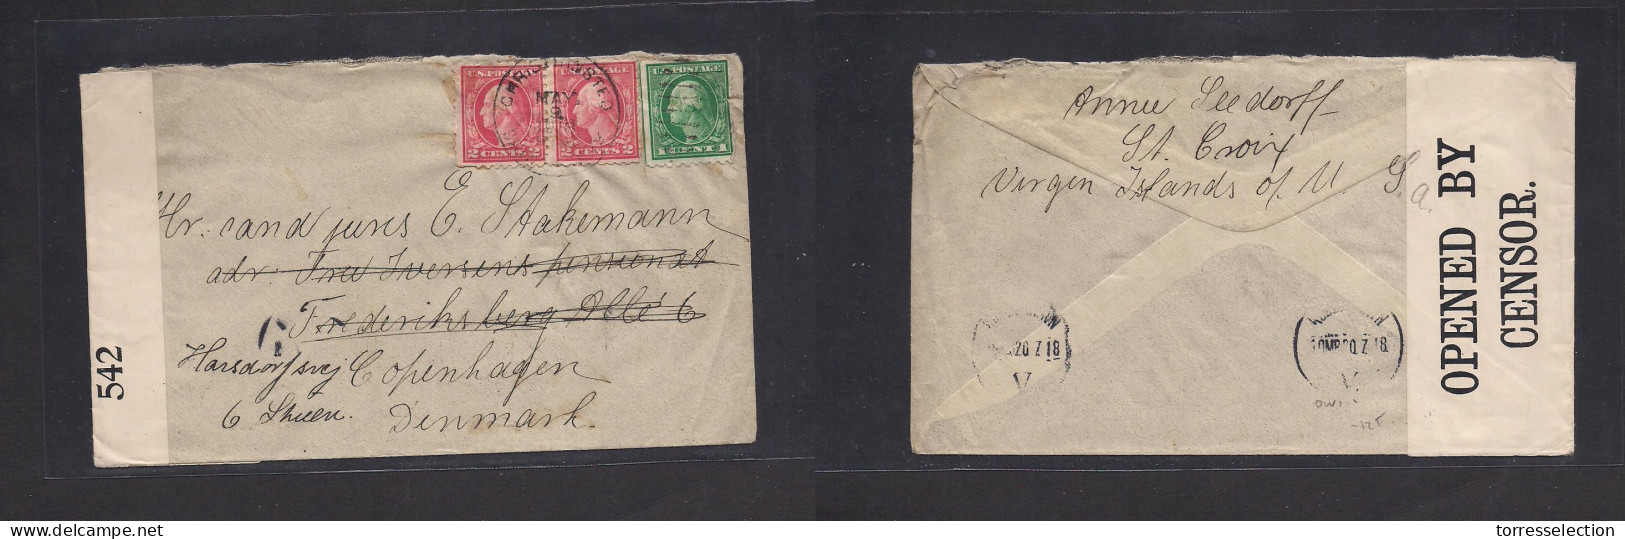 D.W.I.. 1918 (9 May) Christiansted - Denmark (20 July 18) Cph. Multifkd US WWI Censored Envelope. Fine. - Antilles